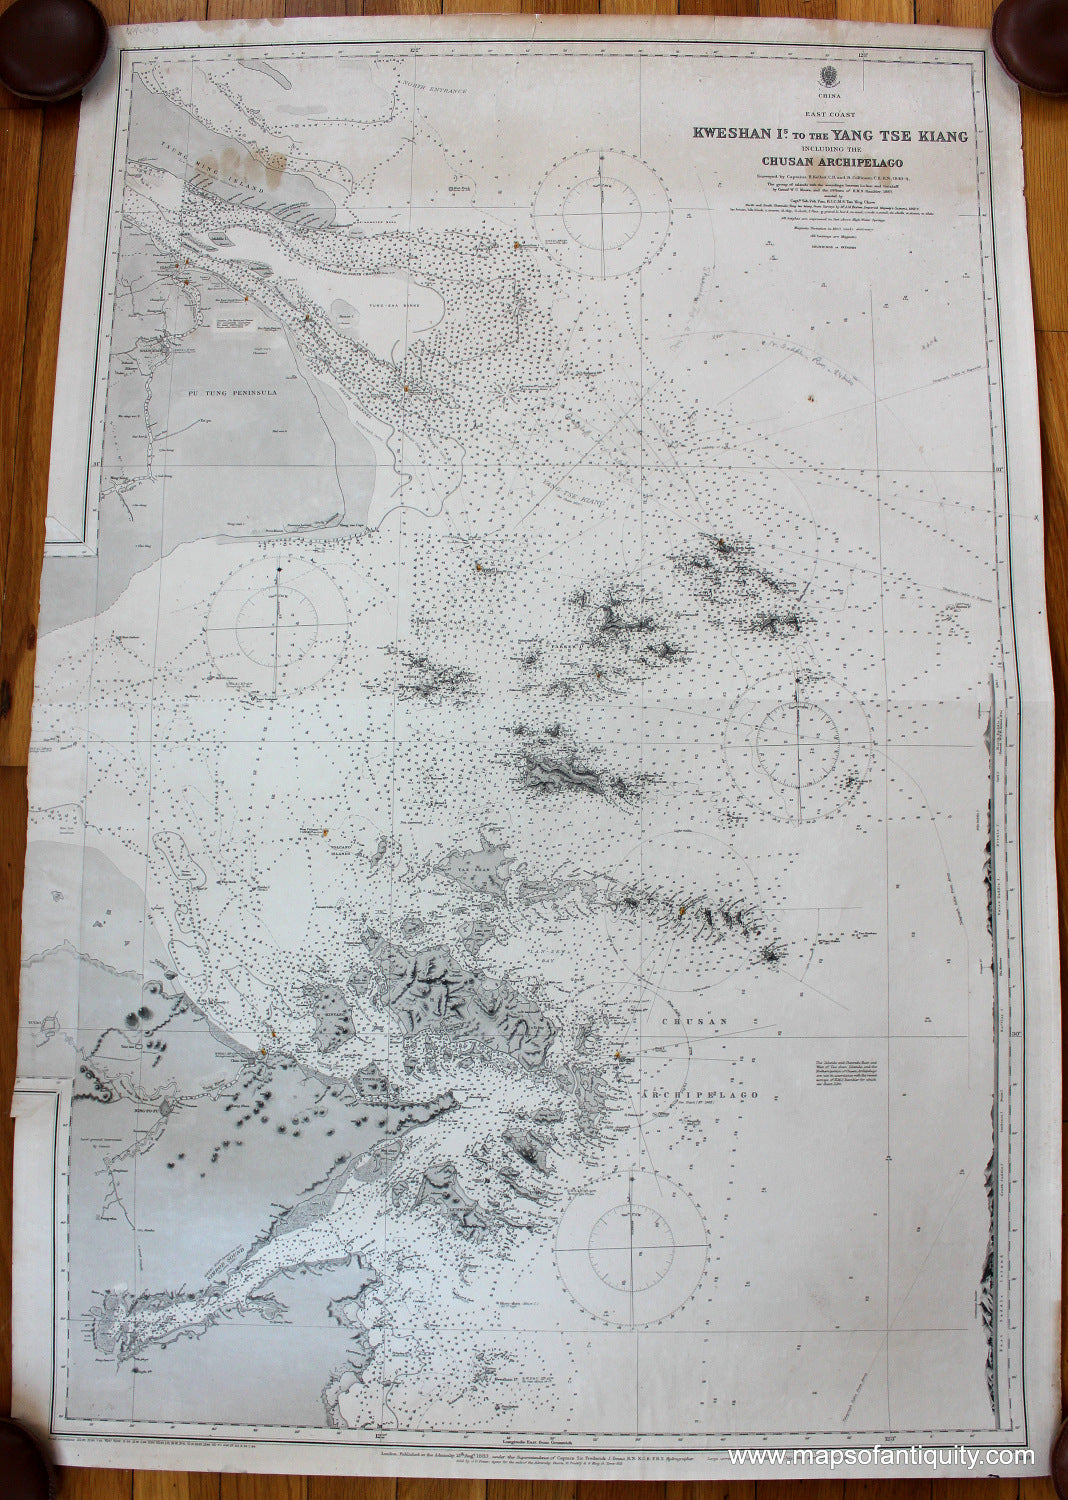 Black-and-White-Nautical-Chart-China-Shanghai-Ningbo-Kweshan-Island-to-the-Yang-Tse-Kiang-Asia-China-1892-British-Admiralty-Maps-Of-Antiquity